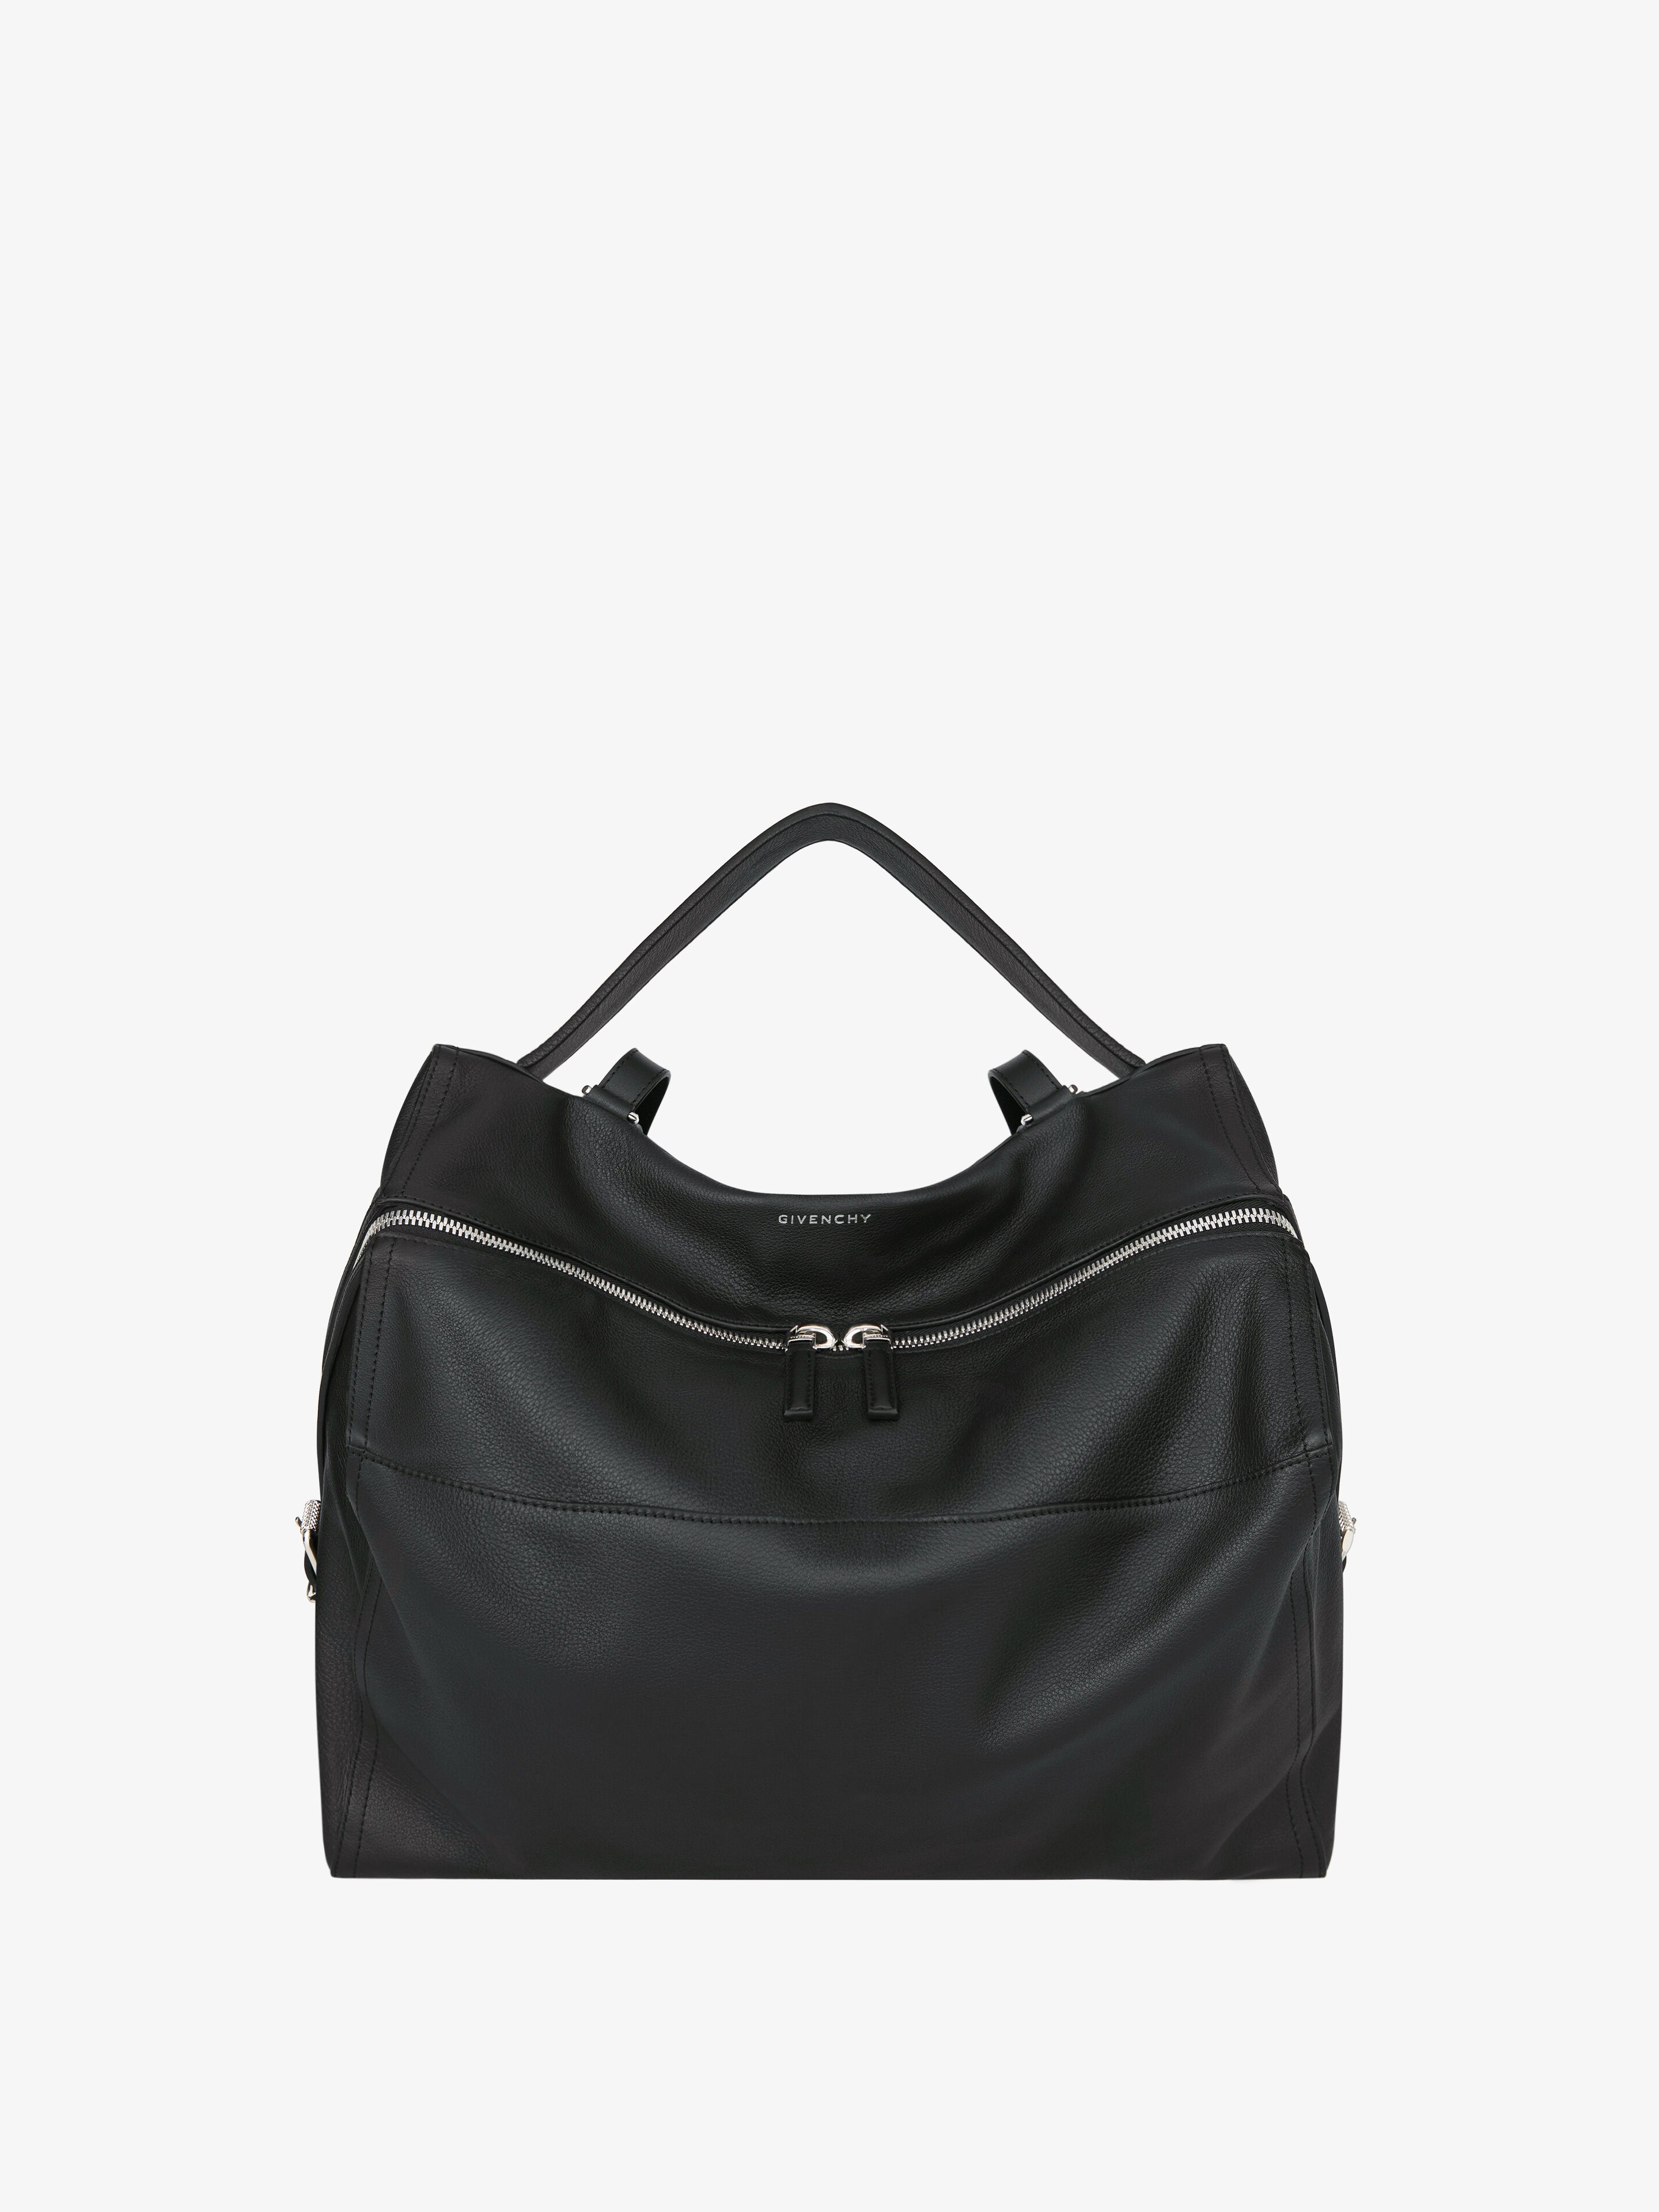 Givenchy Pandora Shoulder bag 359970